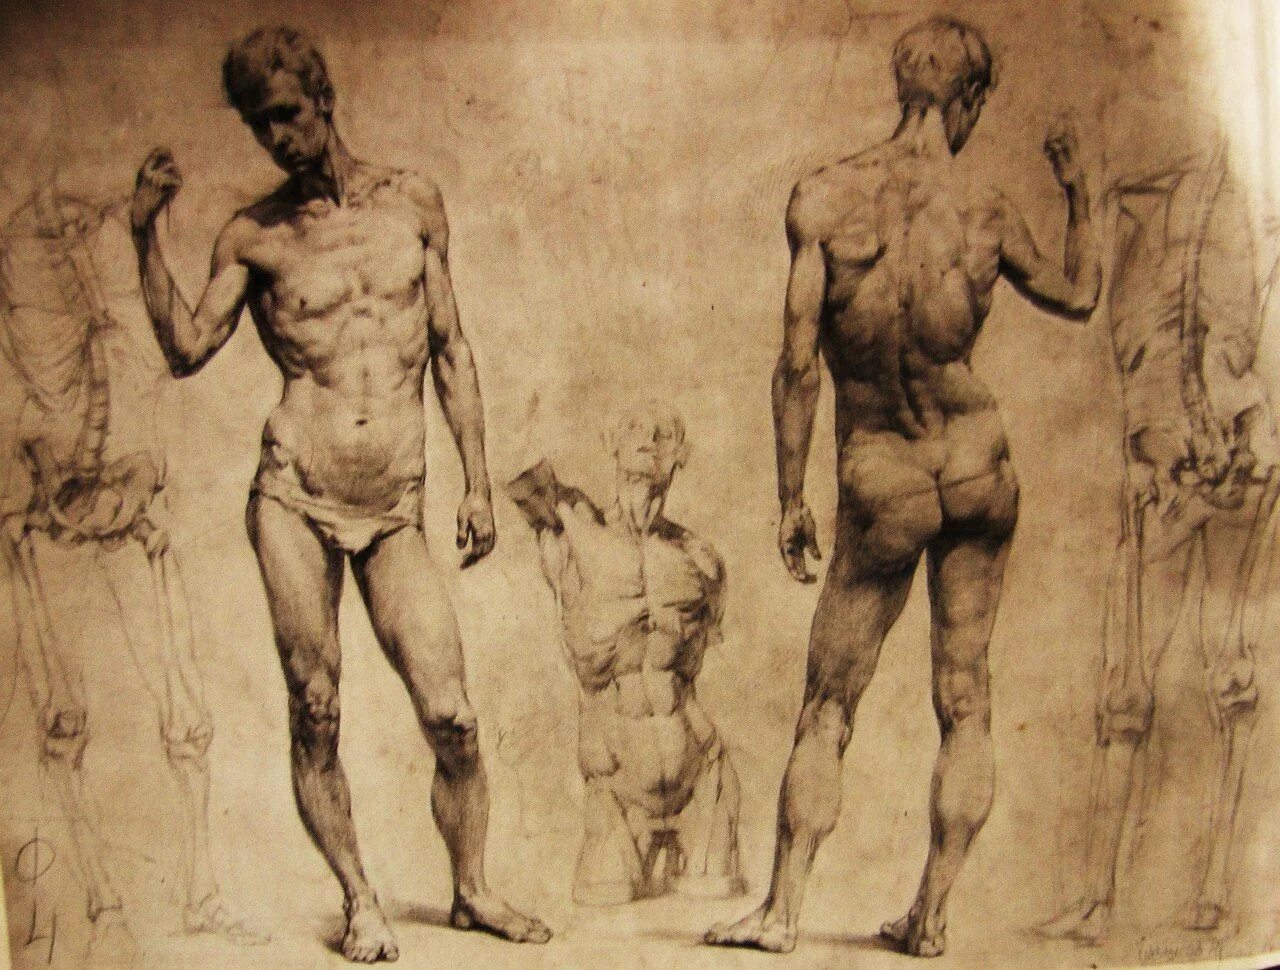 Проблематические натуры. Контрапост Микеланджело. Аполлон контрапост. Контрапост Академия художеств. Могилевцев анатомия фигуры человека.